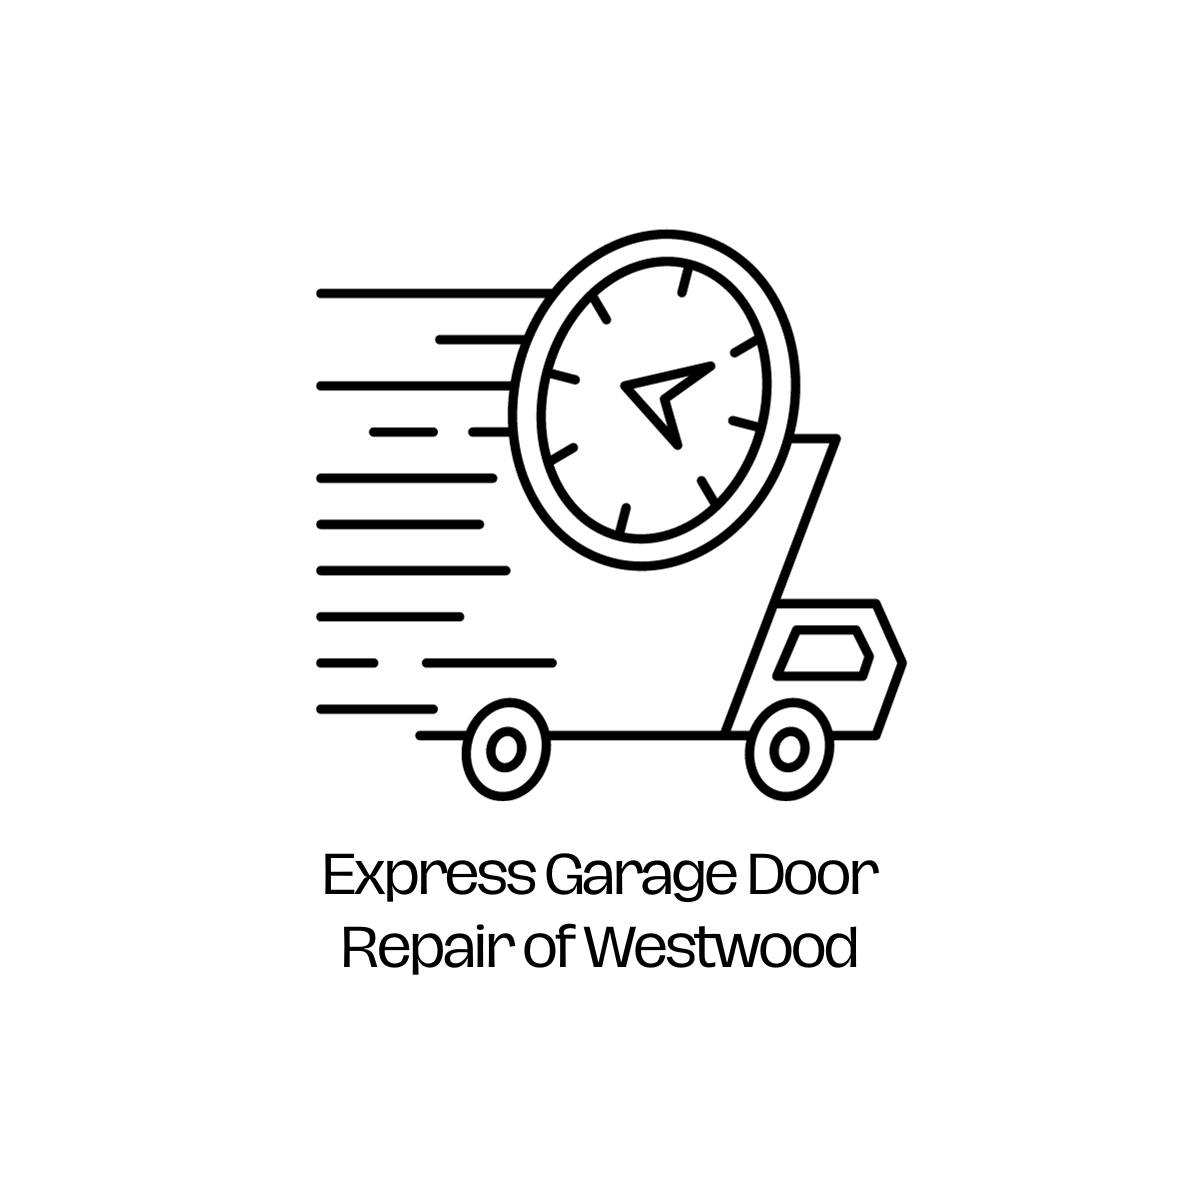 Express Garage Door Repair of Westwood